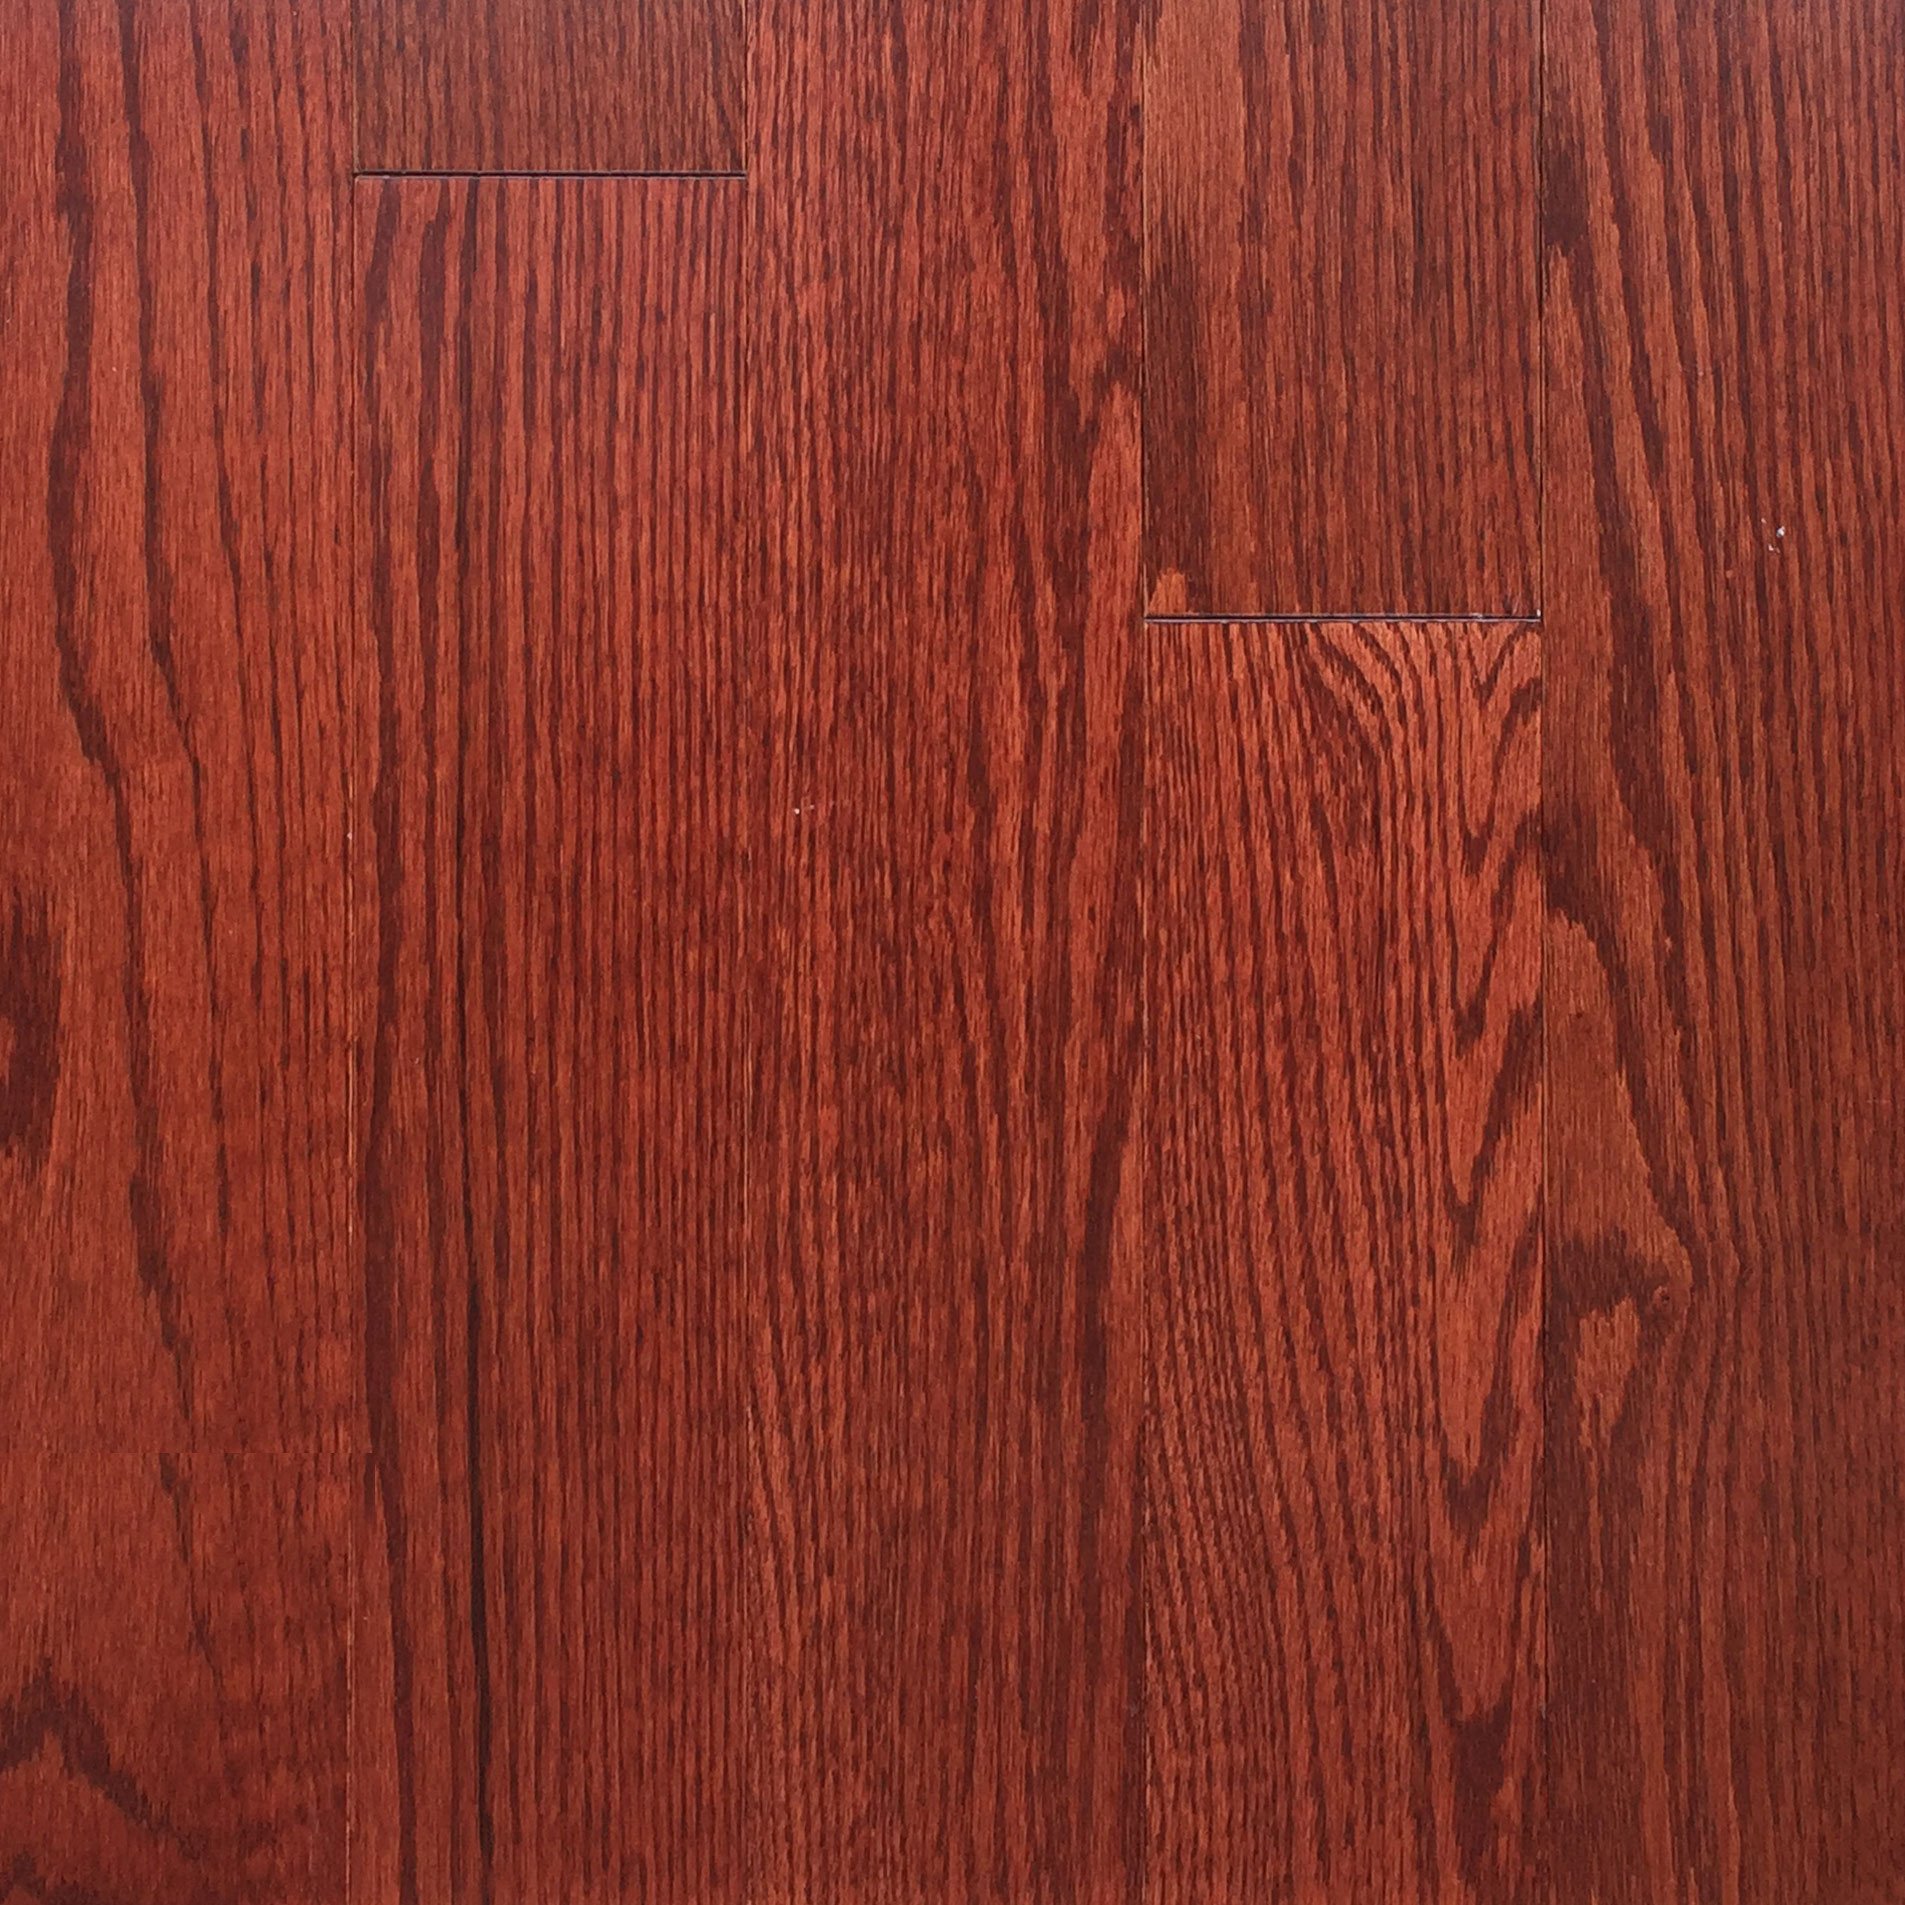 Red Oak Select Better Uphill Cherry, Red Oak Select Hardwood Flooring